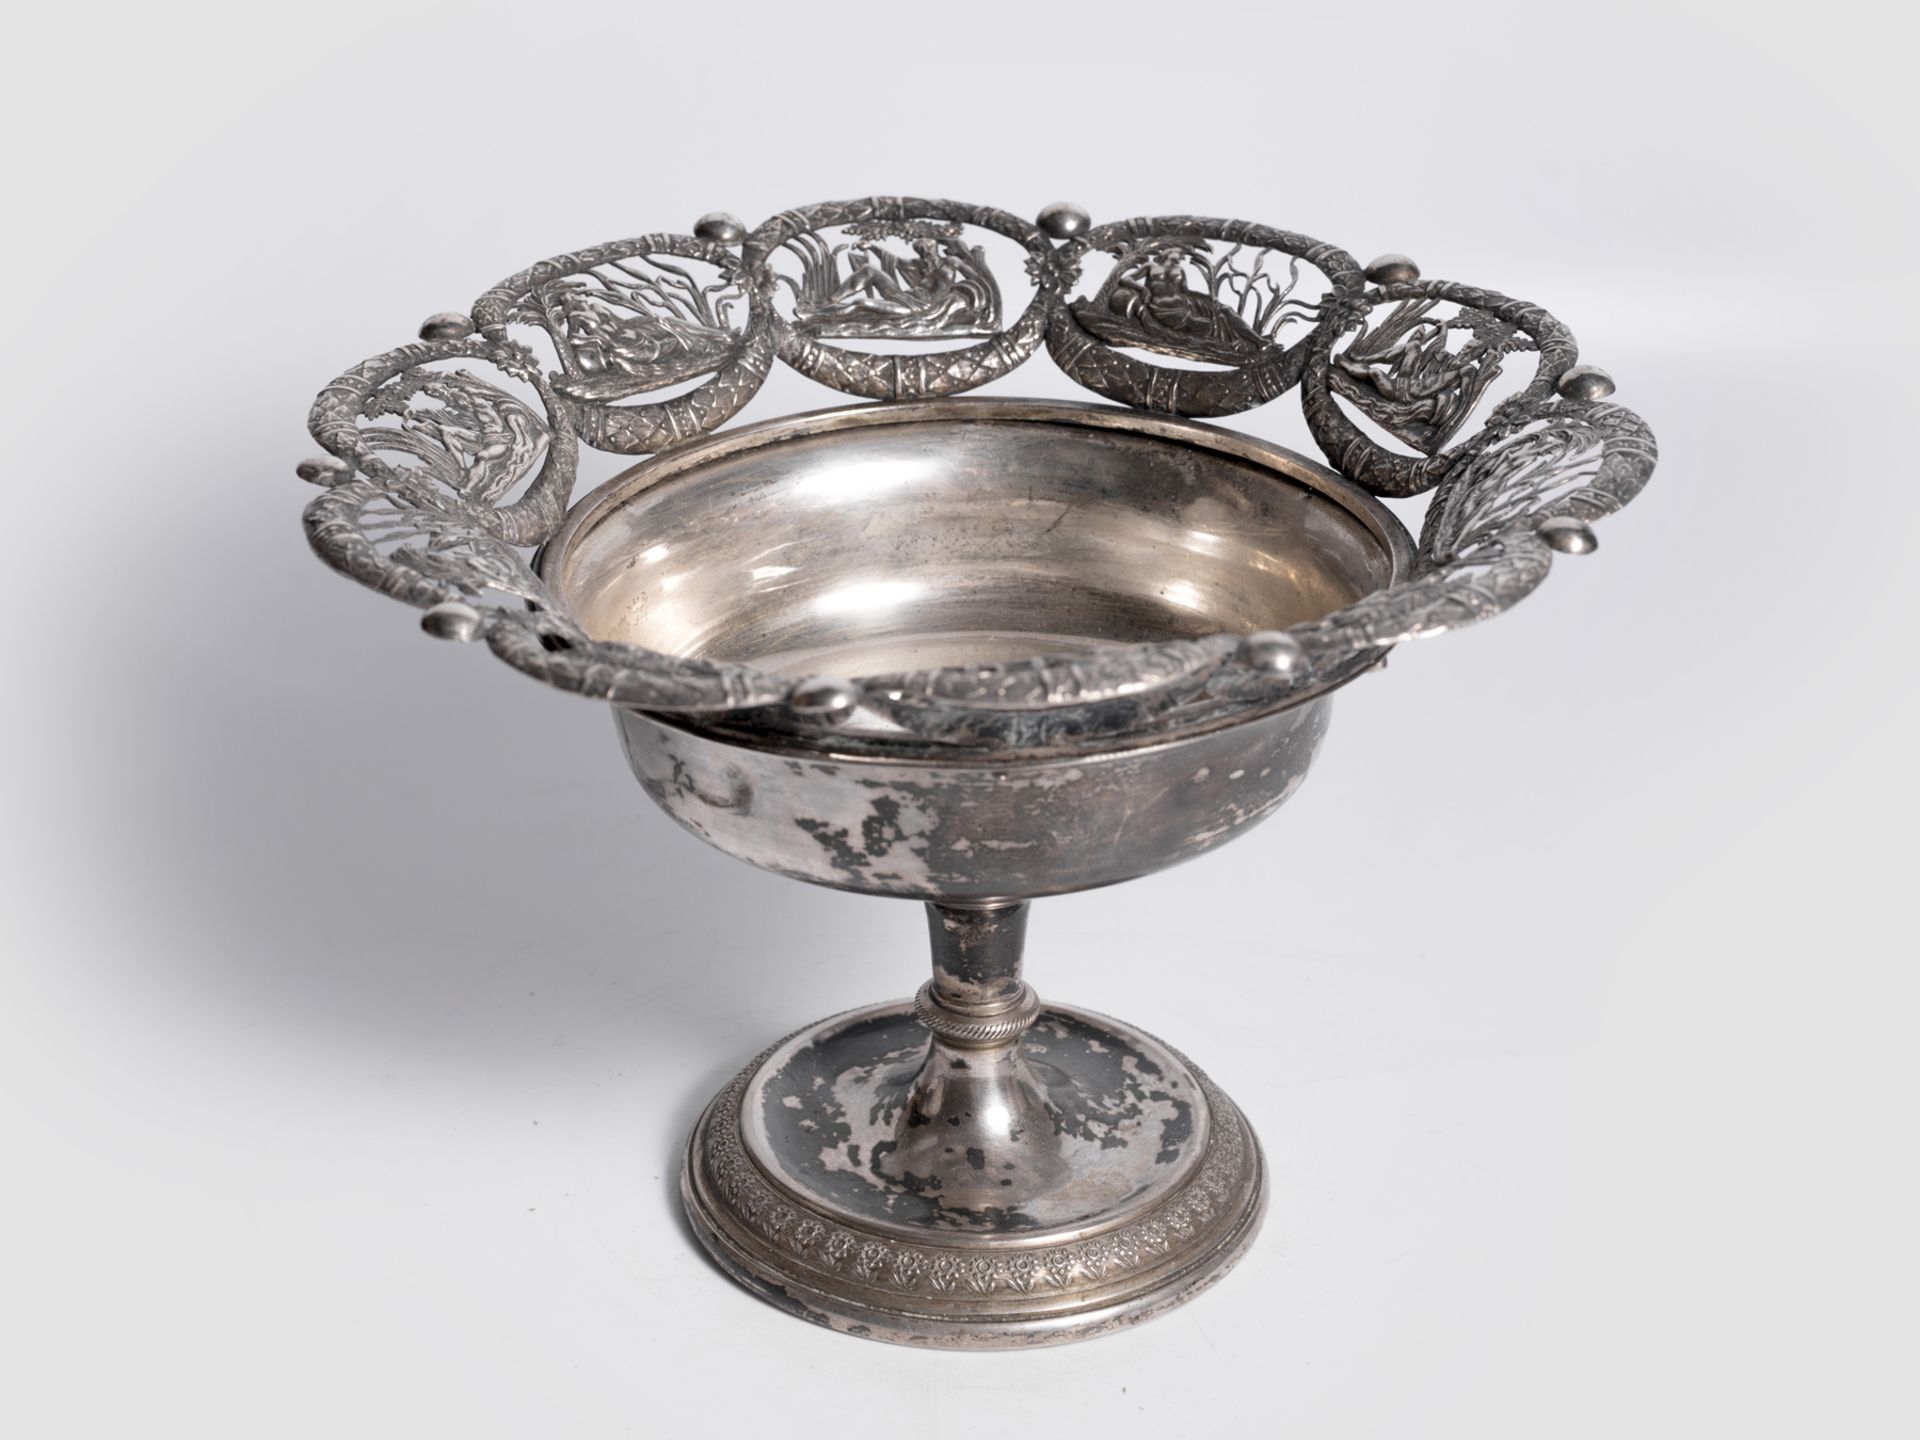 Silver tazza, Empire, um 1810/15, "Alt Wien" silver